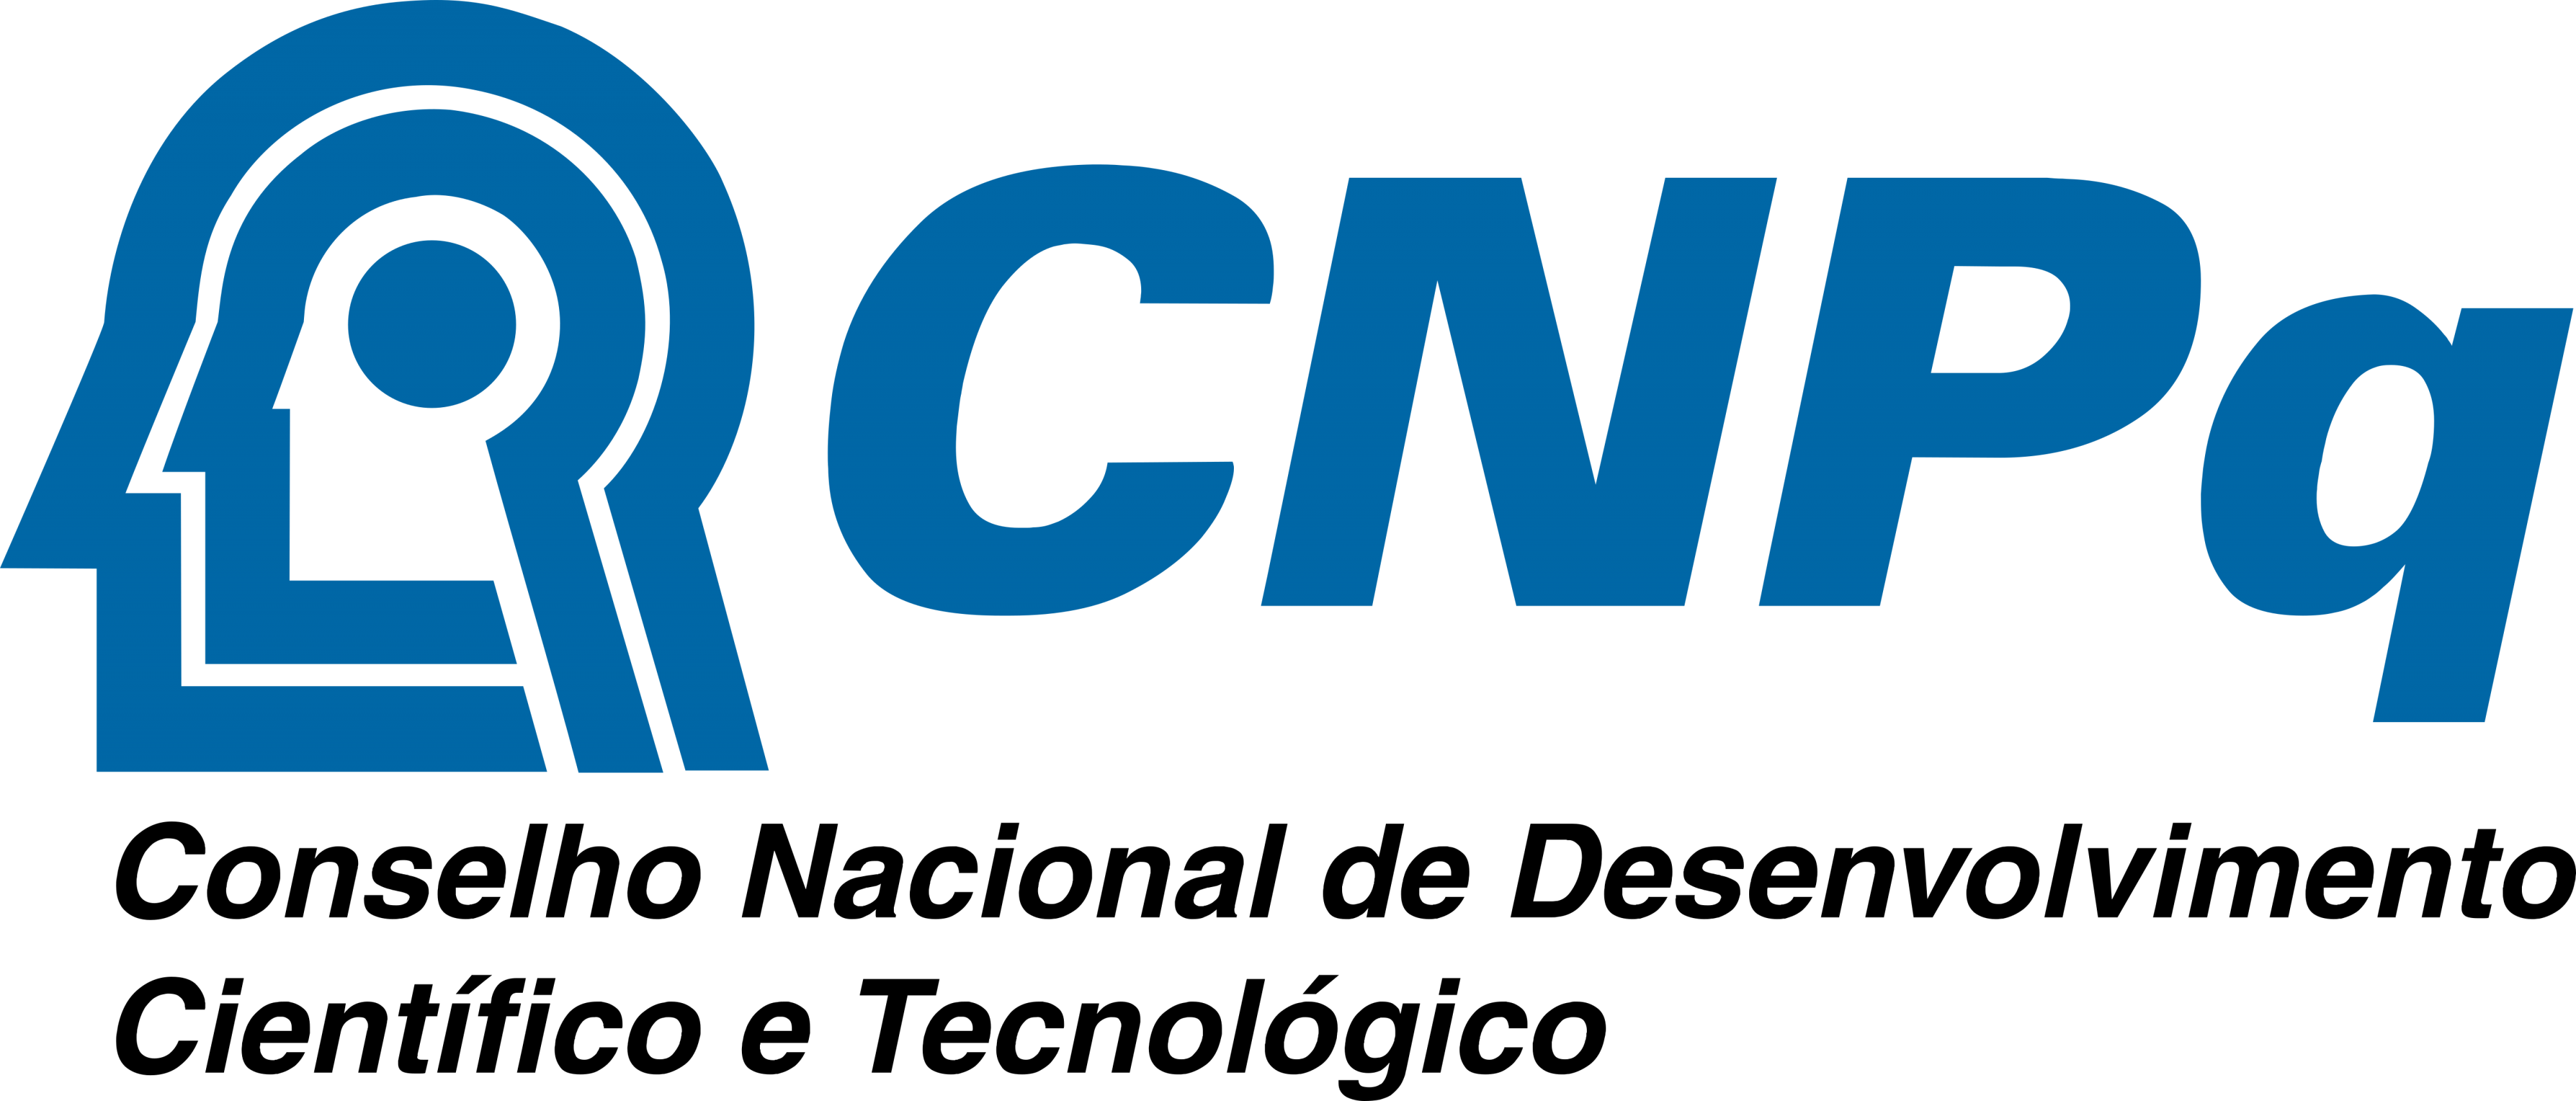 cnpq logo.